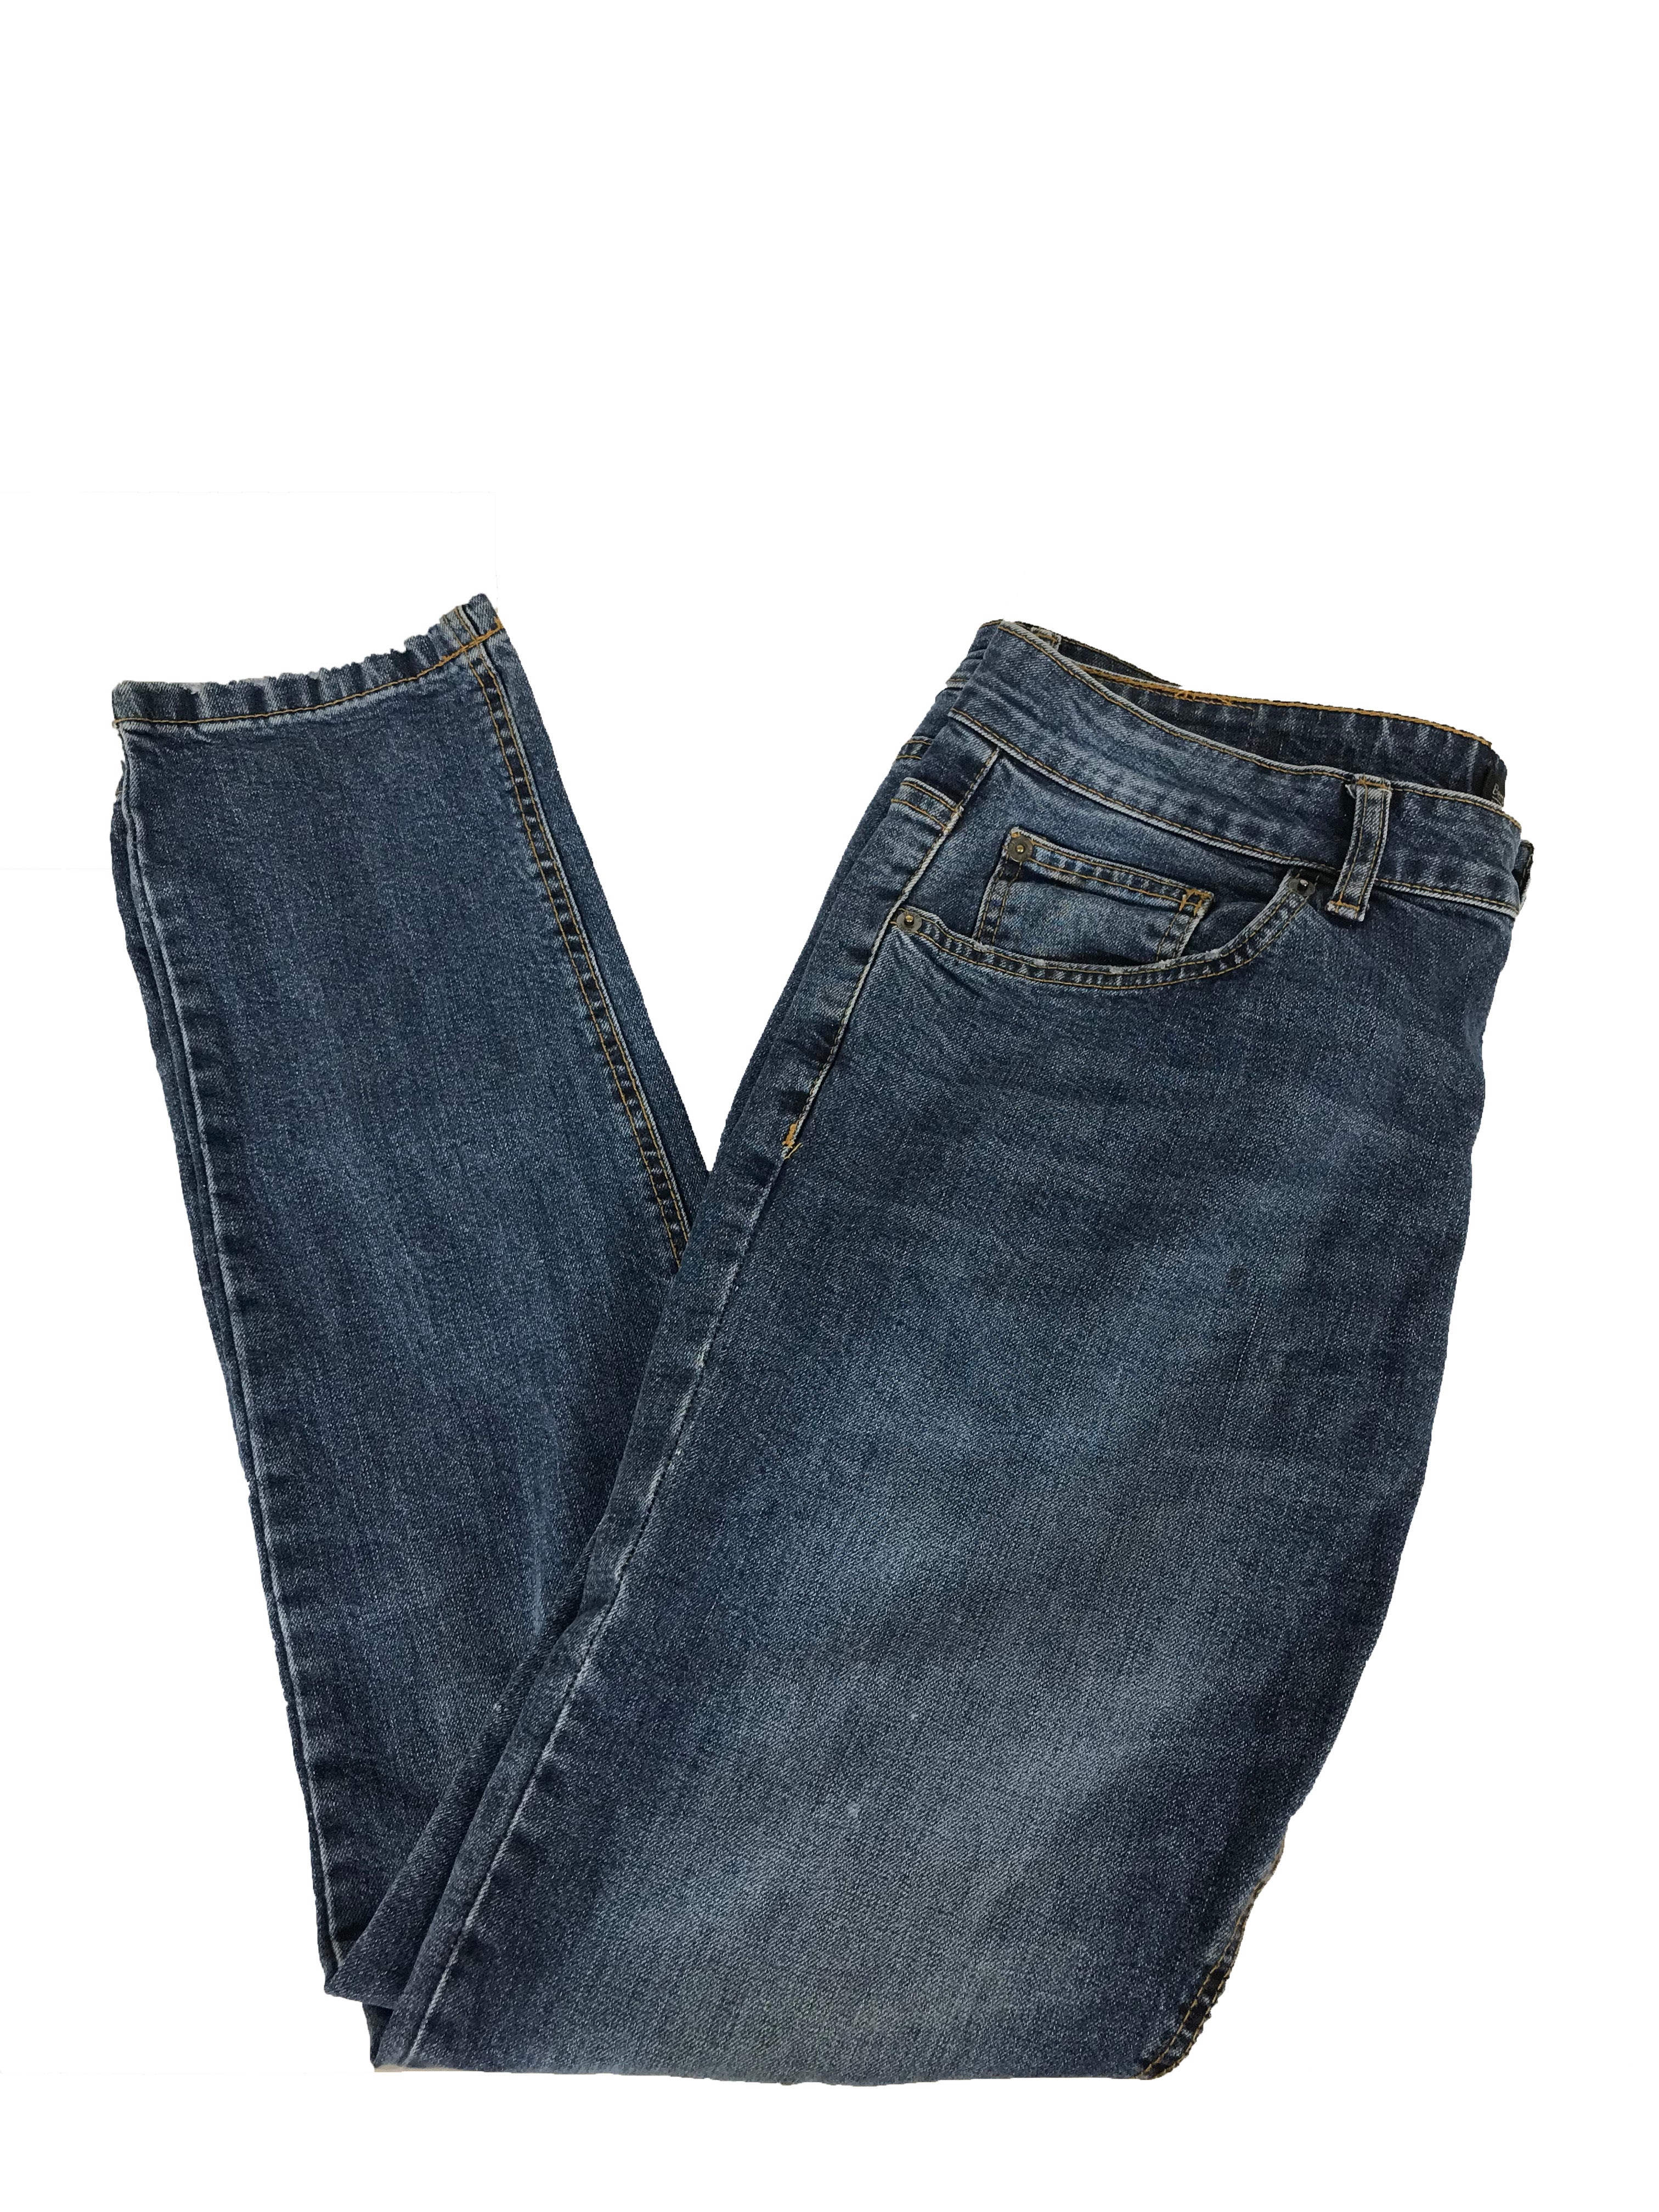 Bershka Skinny Fit Jeans Men's Size 34